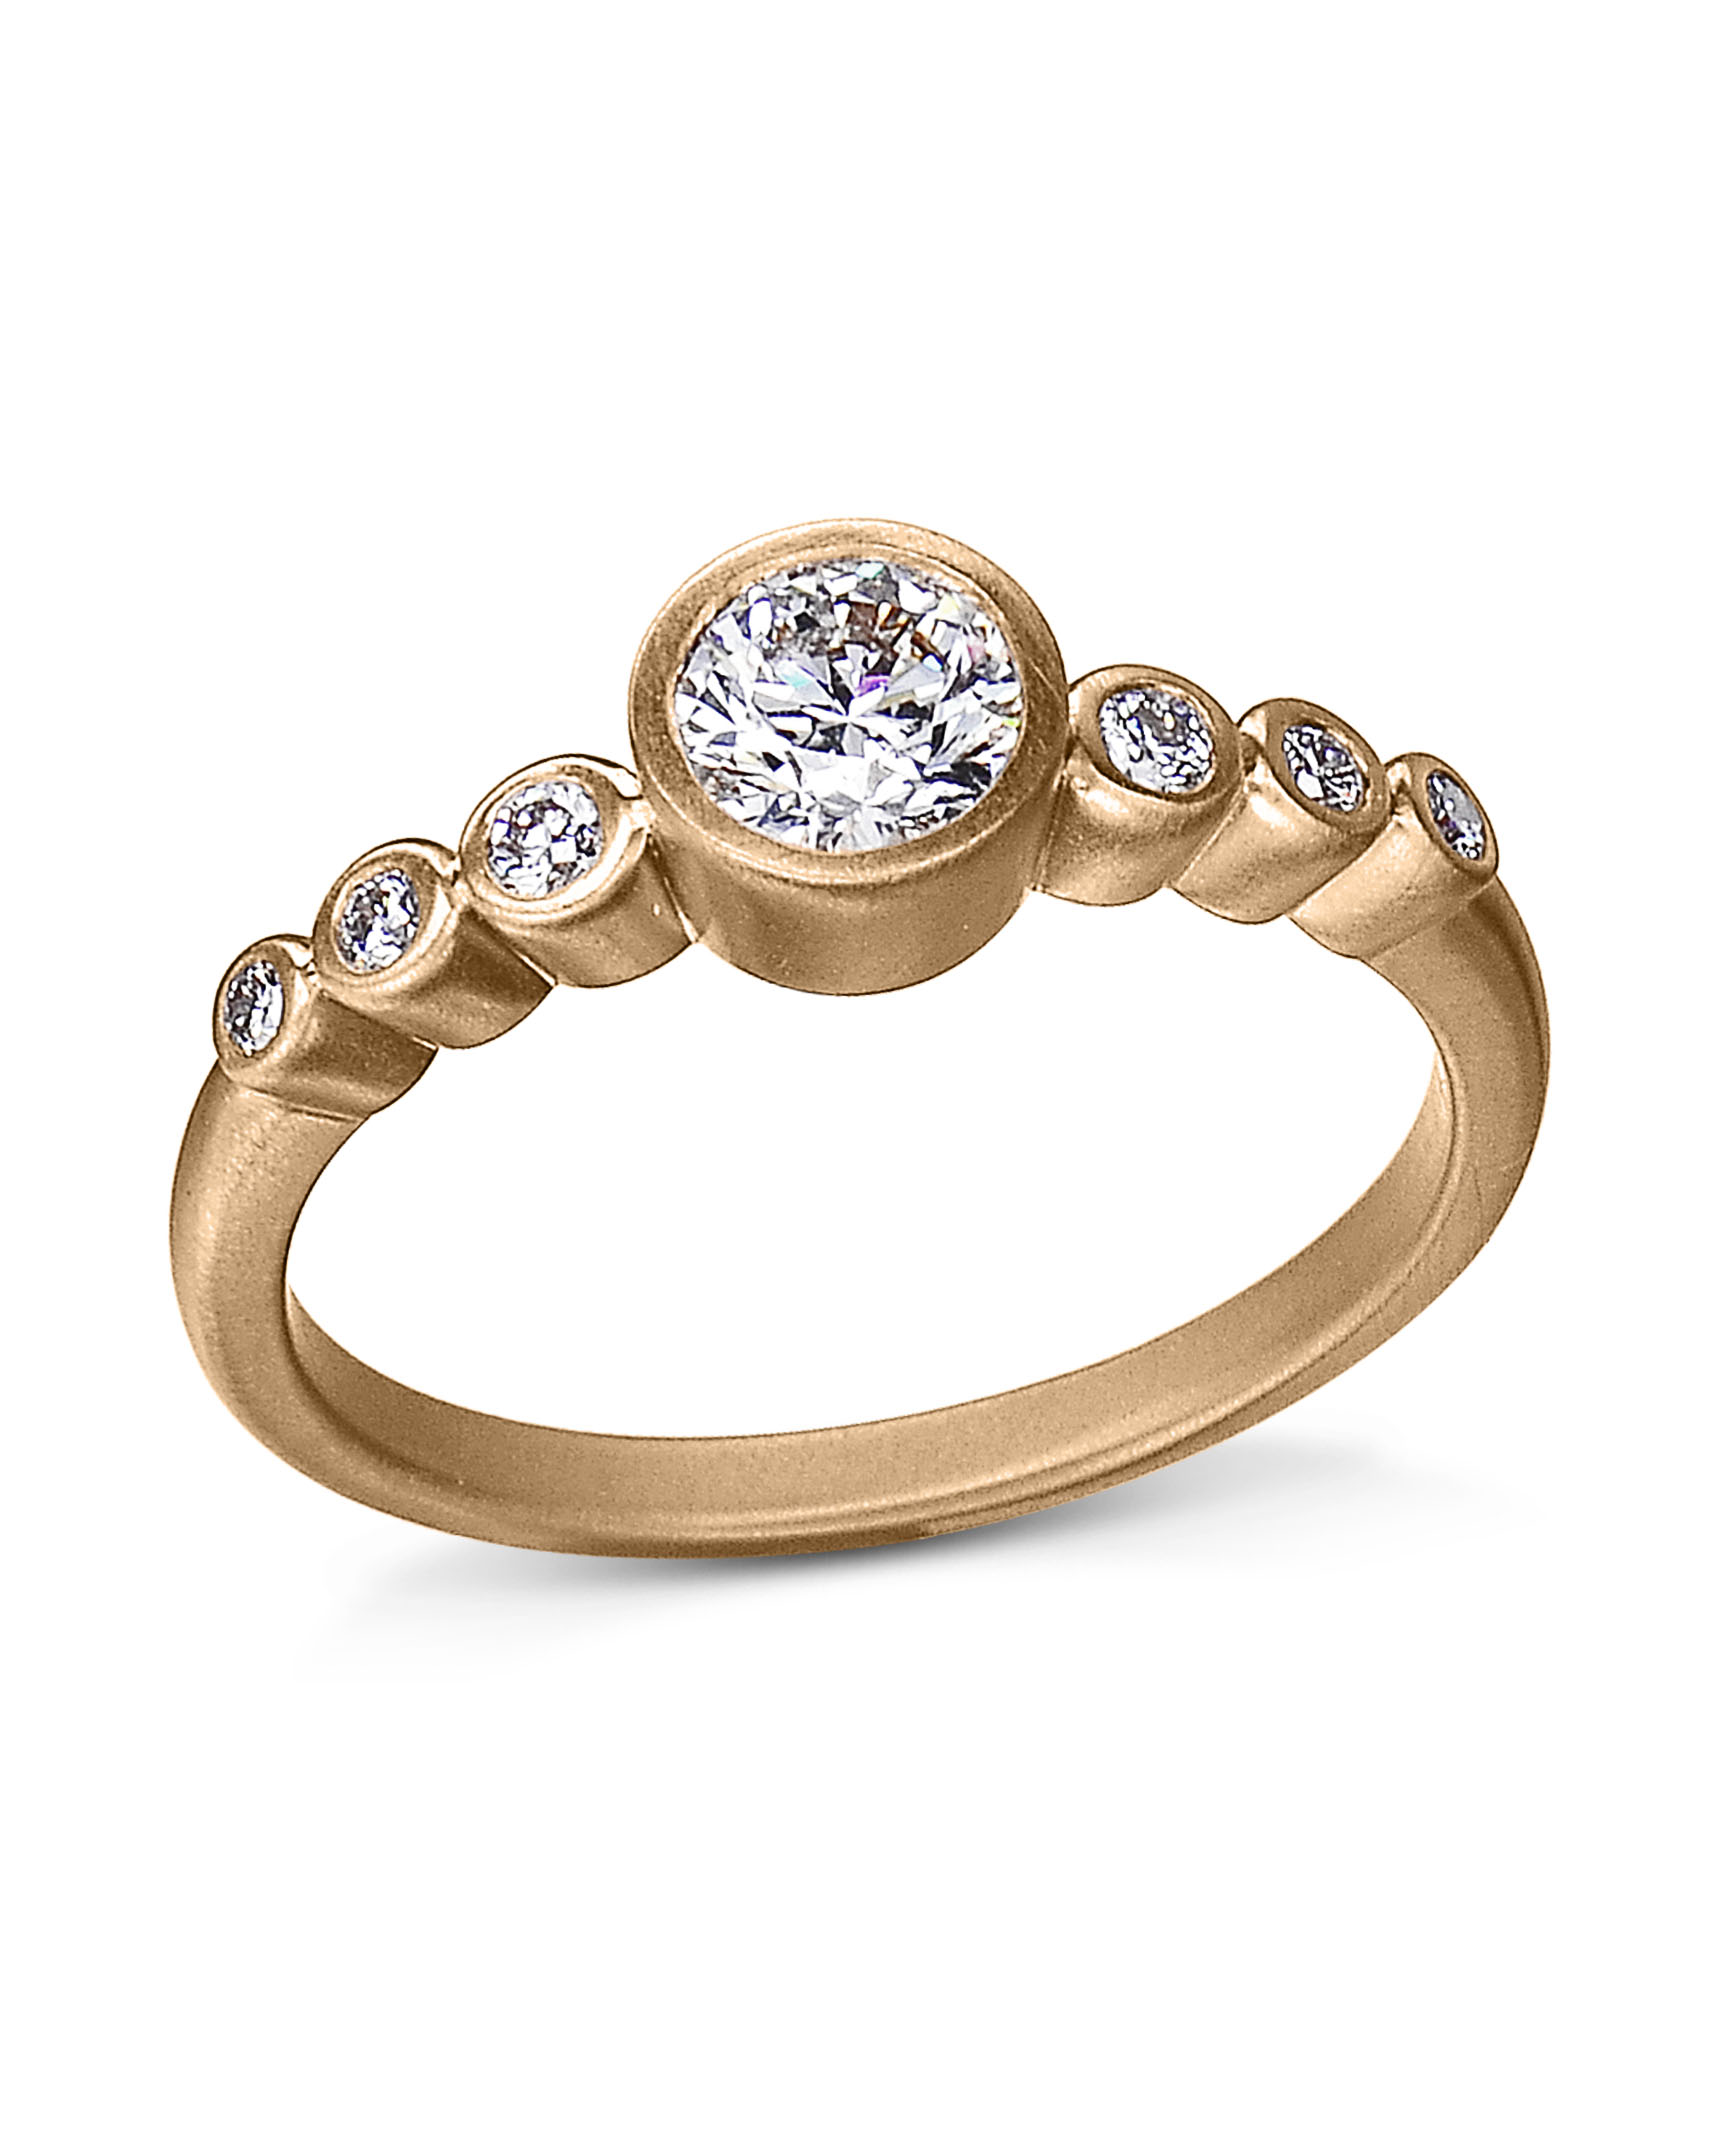 HRRTR259 Round Cluster 7 Stone Diamond Ring | Shining Diamonds®